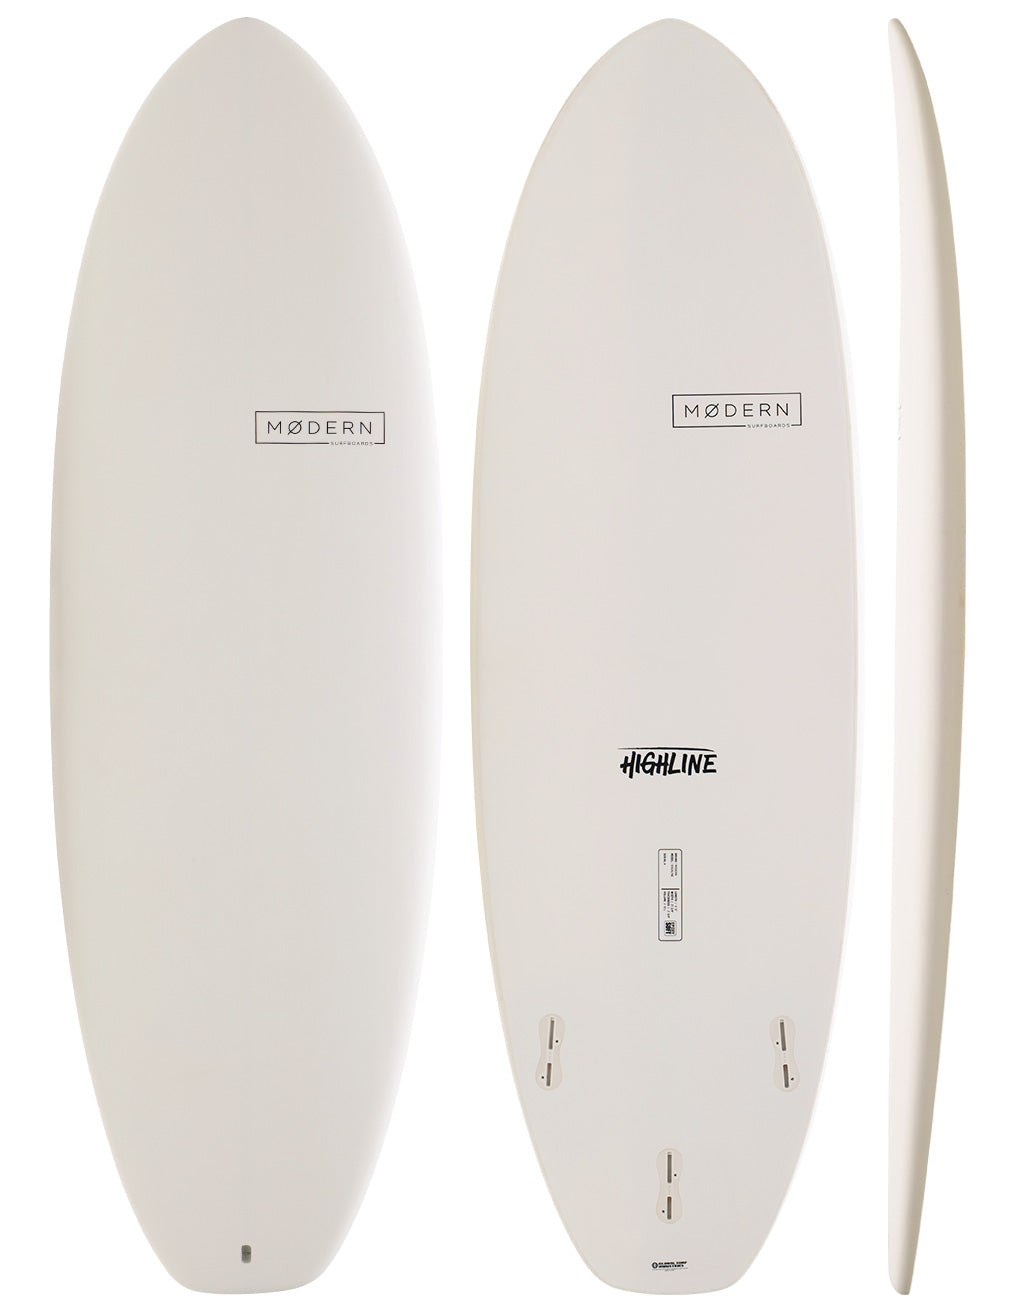 Modern Surfboards - Highline soft surfboard